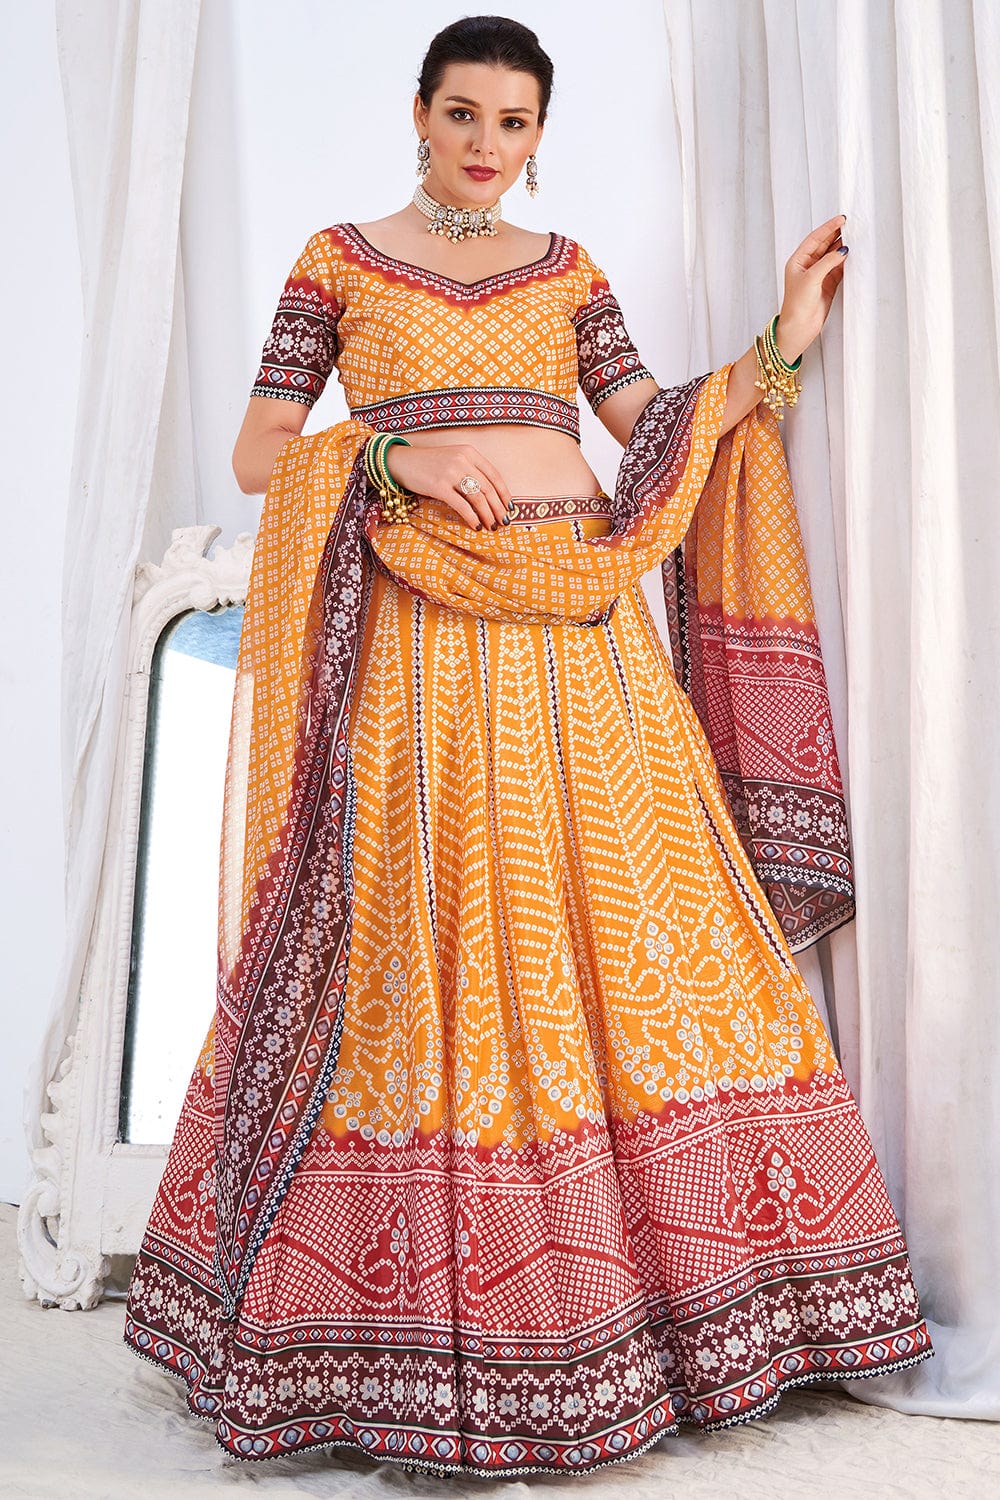 Yellow Colour Designer Lehenga Choli in Net Fabric.